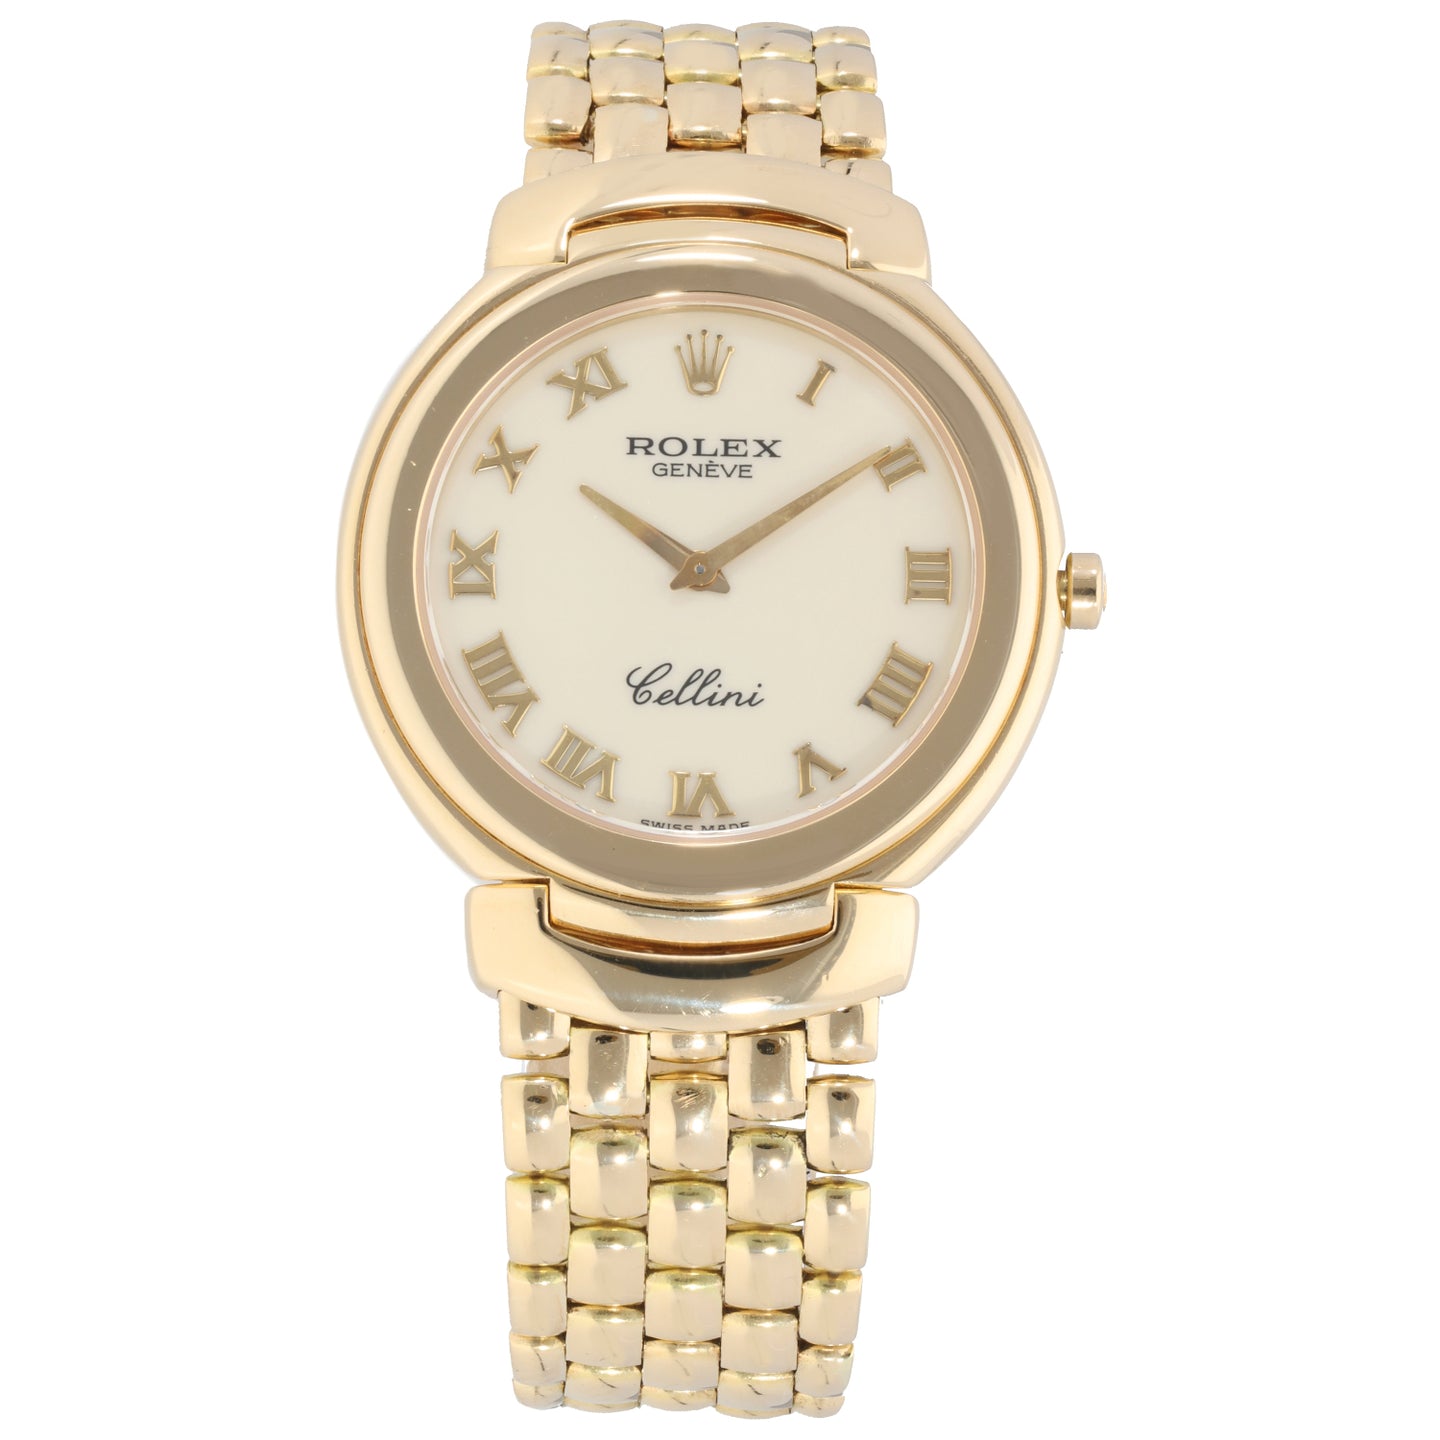 Rolex Cellini 6623 37mm Gold Watch